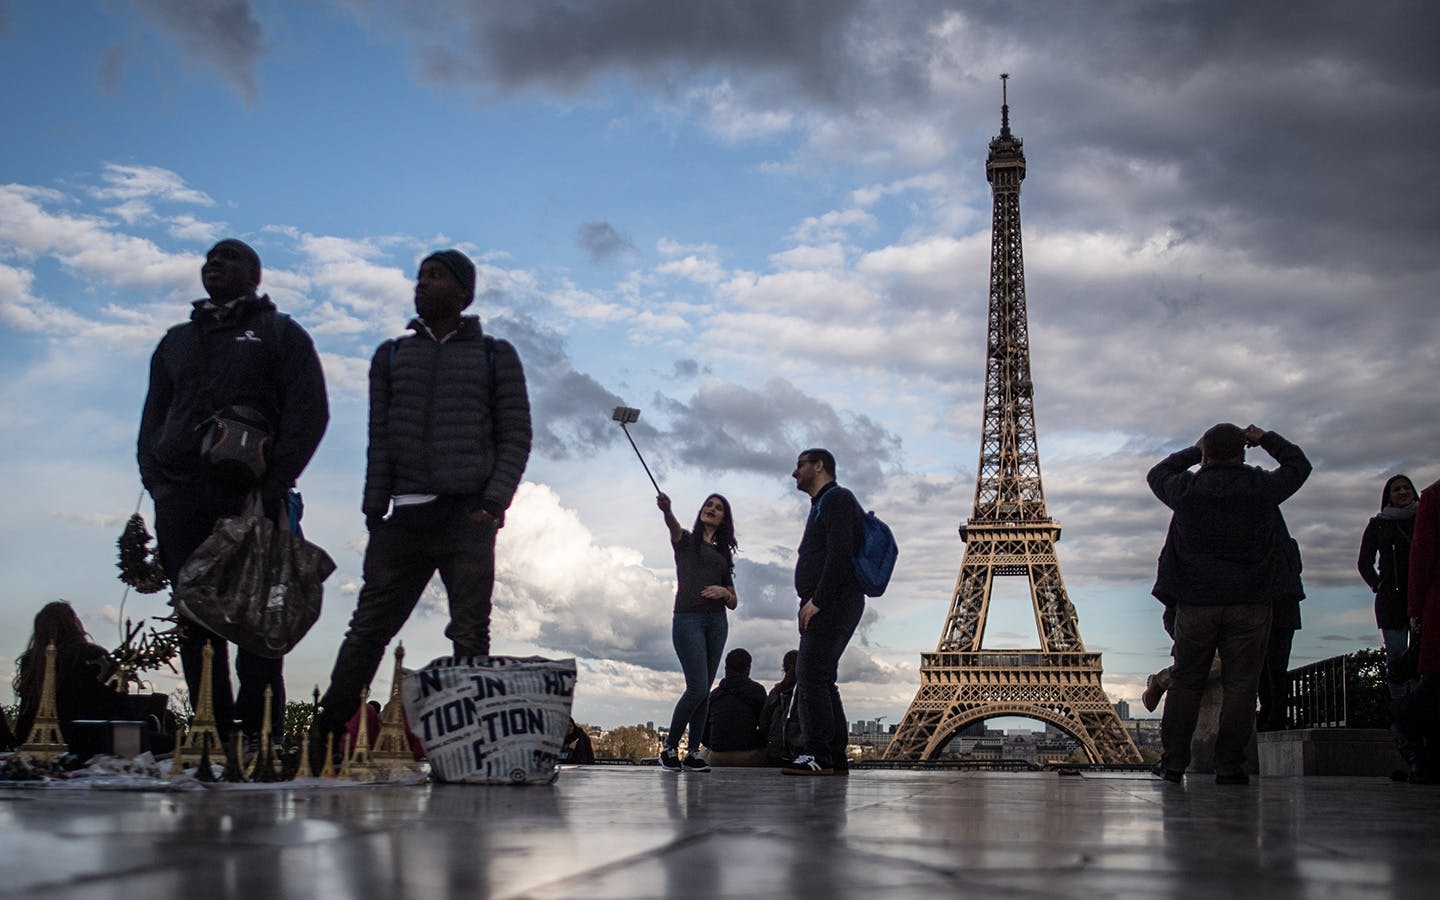 Tour Eiffel, Trocadero, Tourists at the Eiffel Tower in Paris.